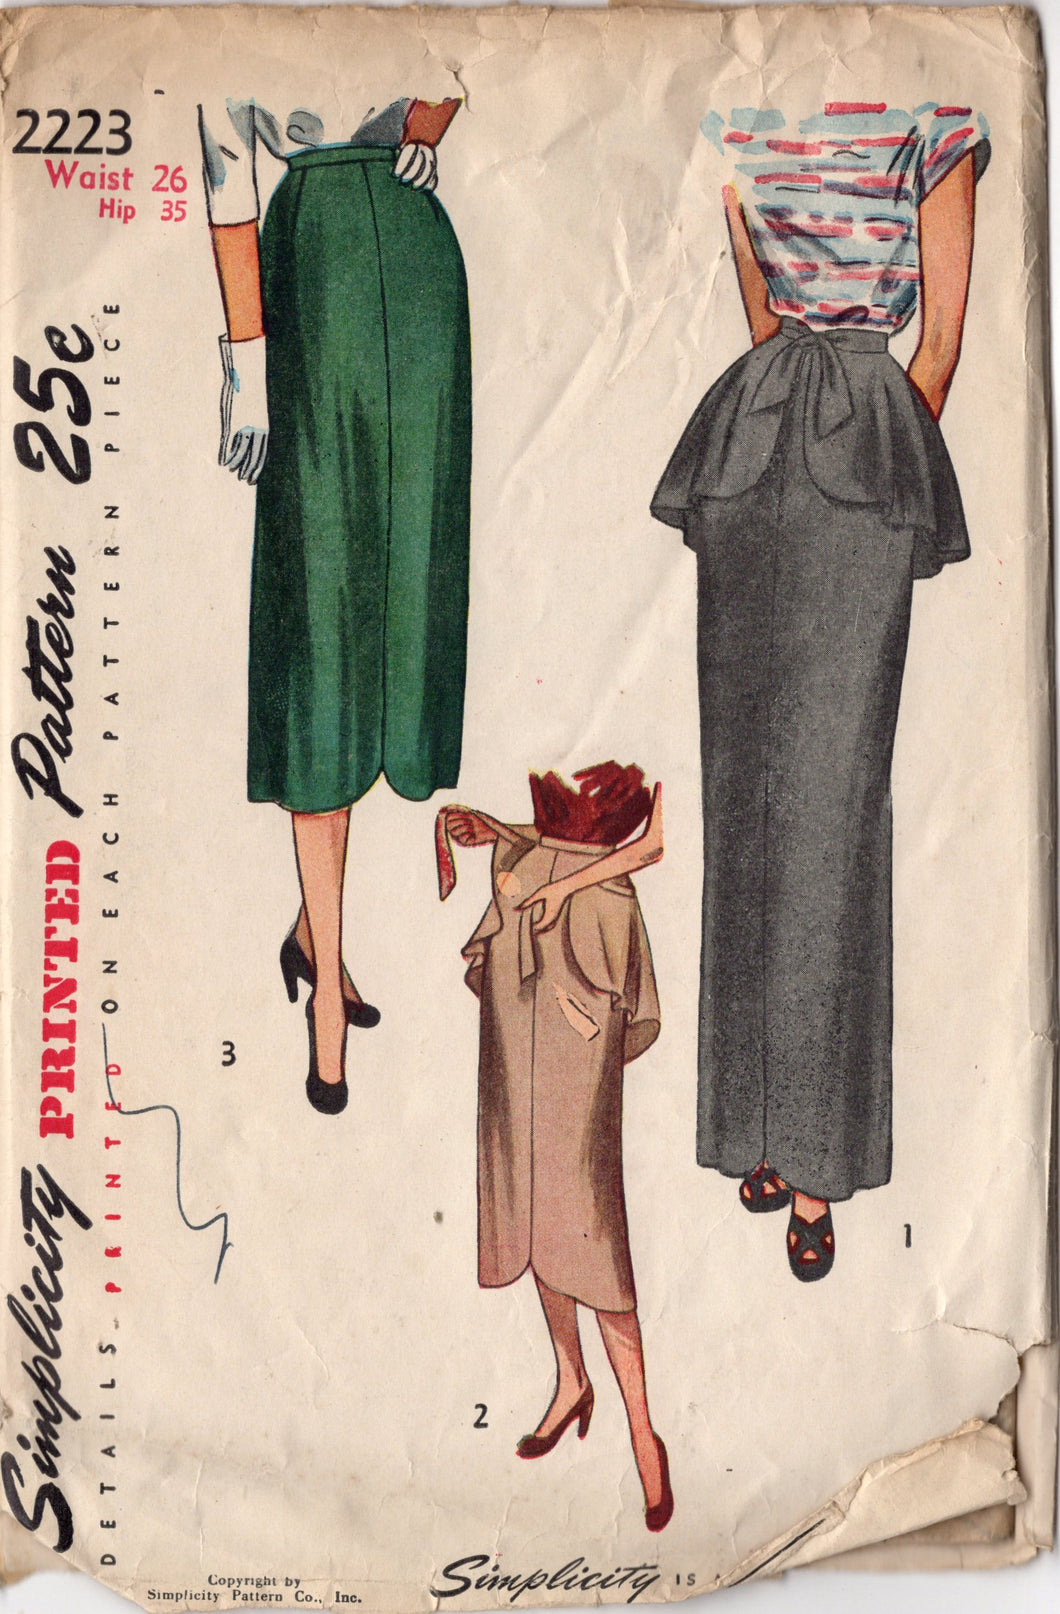 1940's Simplicity Straight Line Skirt Pattern with Tie on Peplum - Waist 26